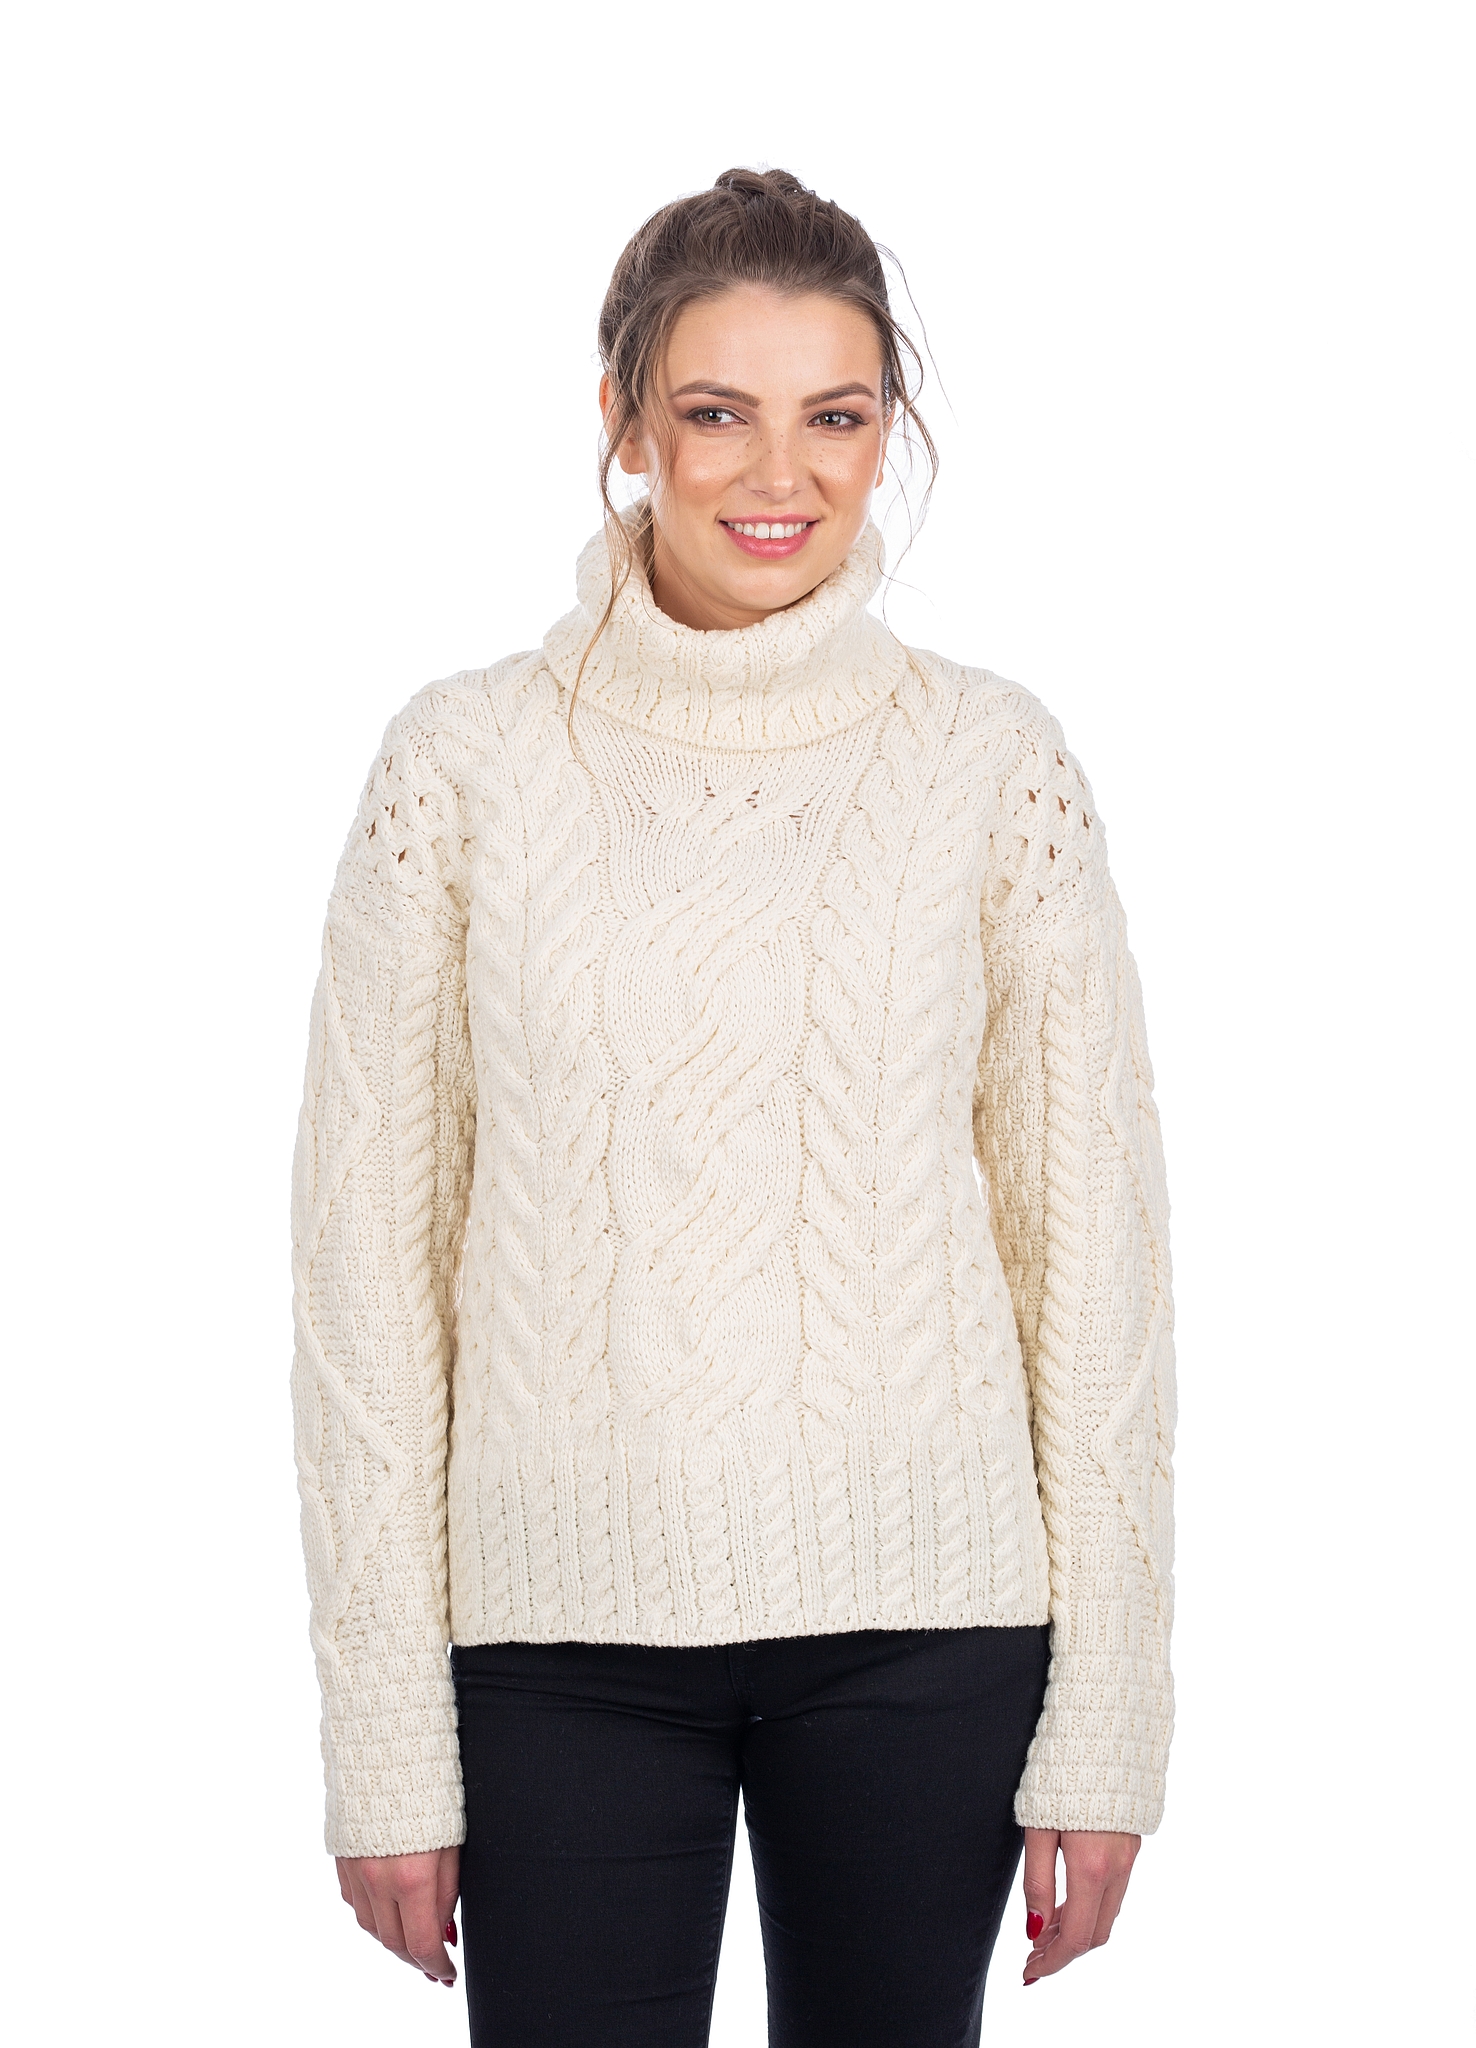 SAOL Irish Aran Sweater 100% Super Soft Premium Merino Wool Cable Knit White Turtleneck Pullover for Women Made in Ireland - image 3 of 5